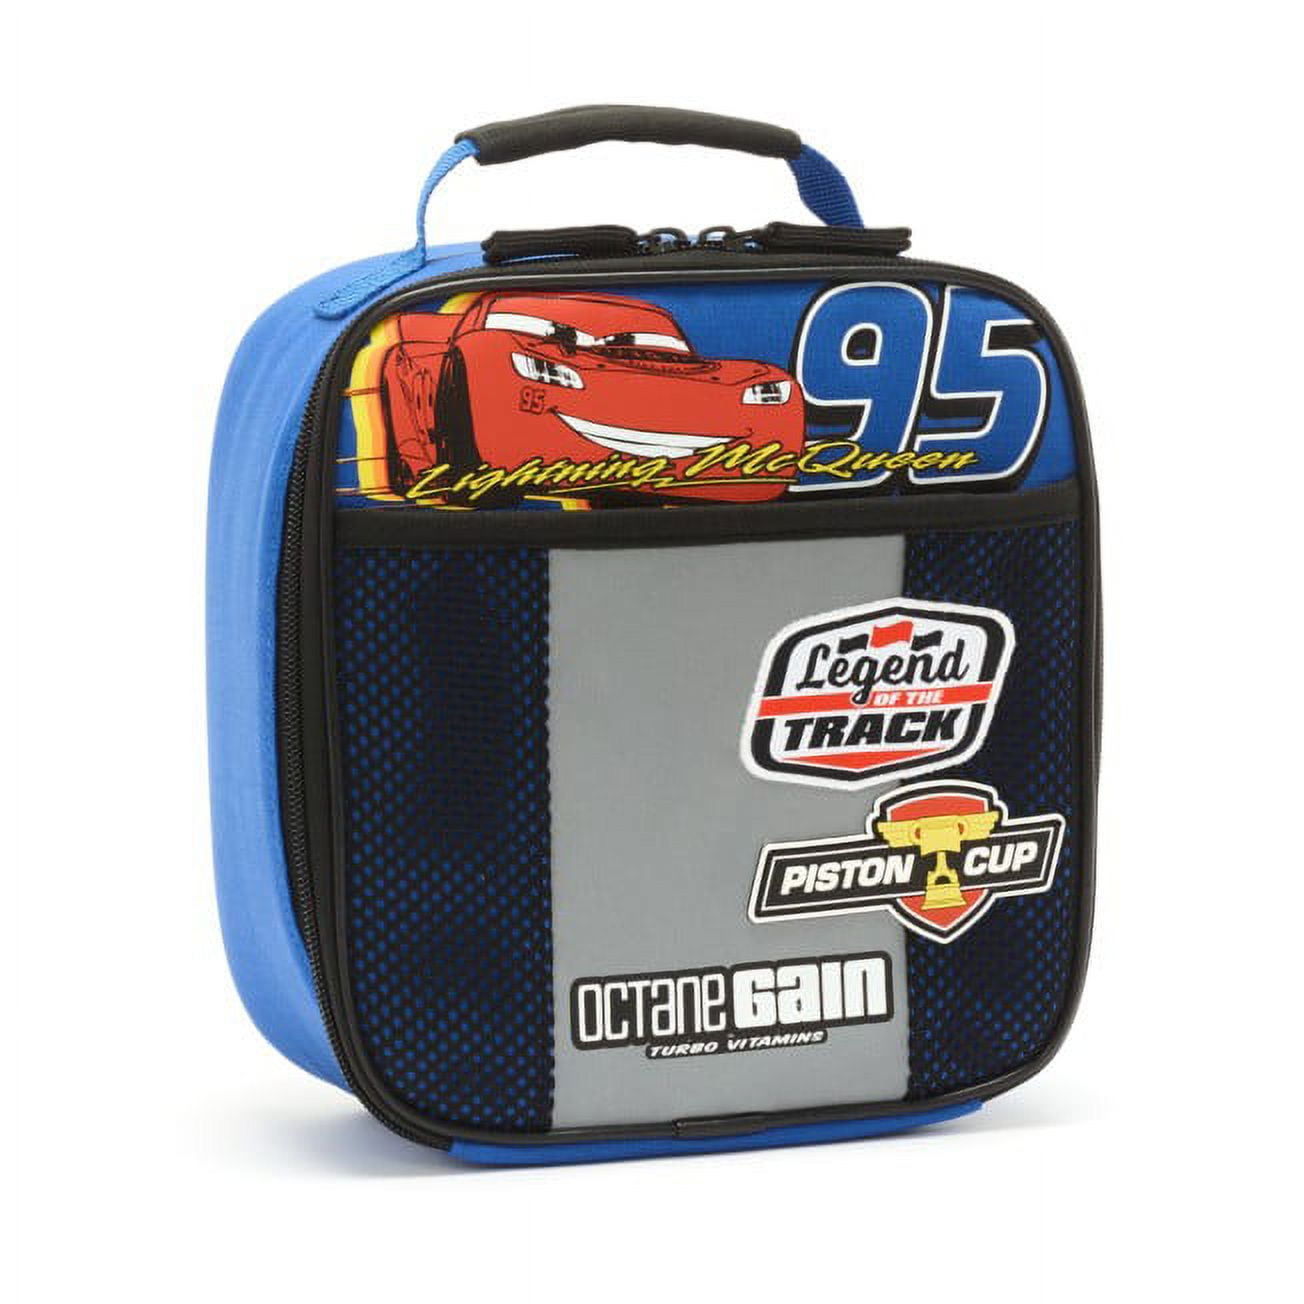 Buy Cars Lightning McQueen Lunch Box & Water Bottle Combo Set